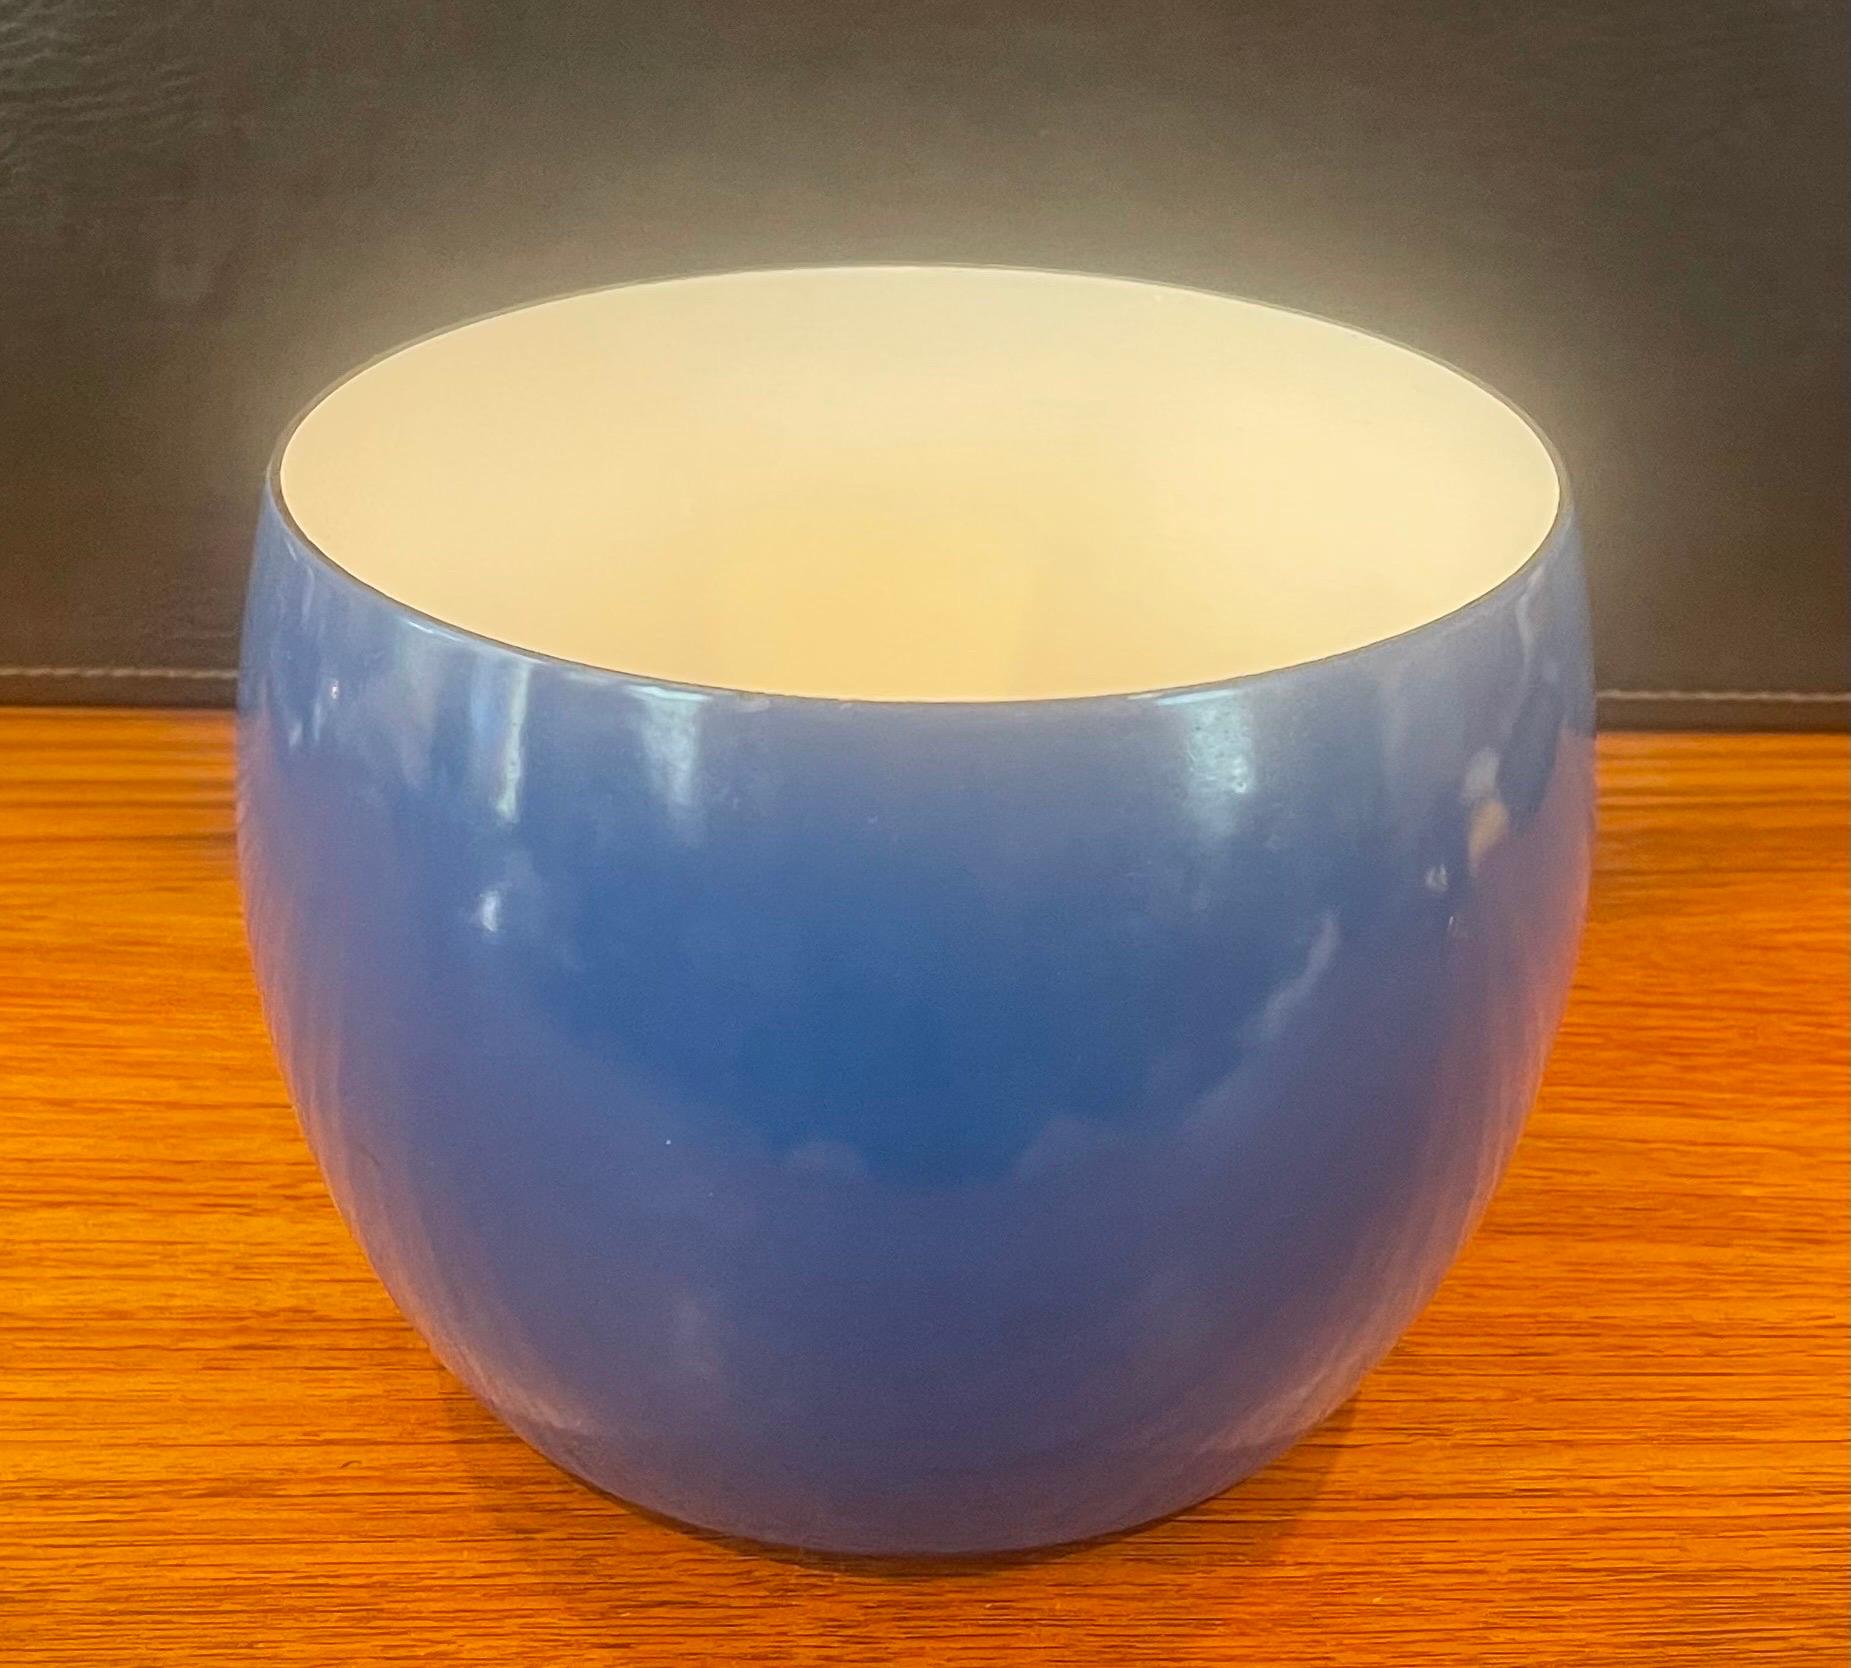 Pair of Danish Modern Blue & White Enamel Bowl by Jens Quistgaard for Dansk For Sale 2